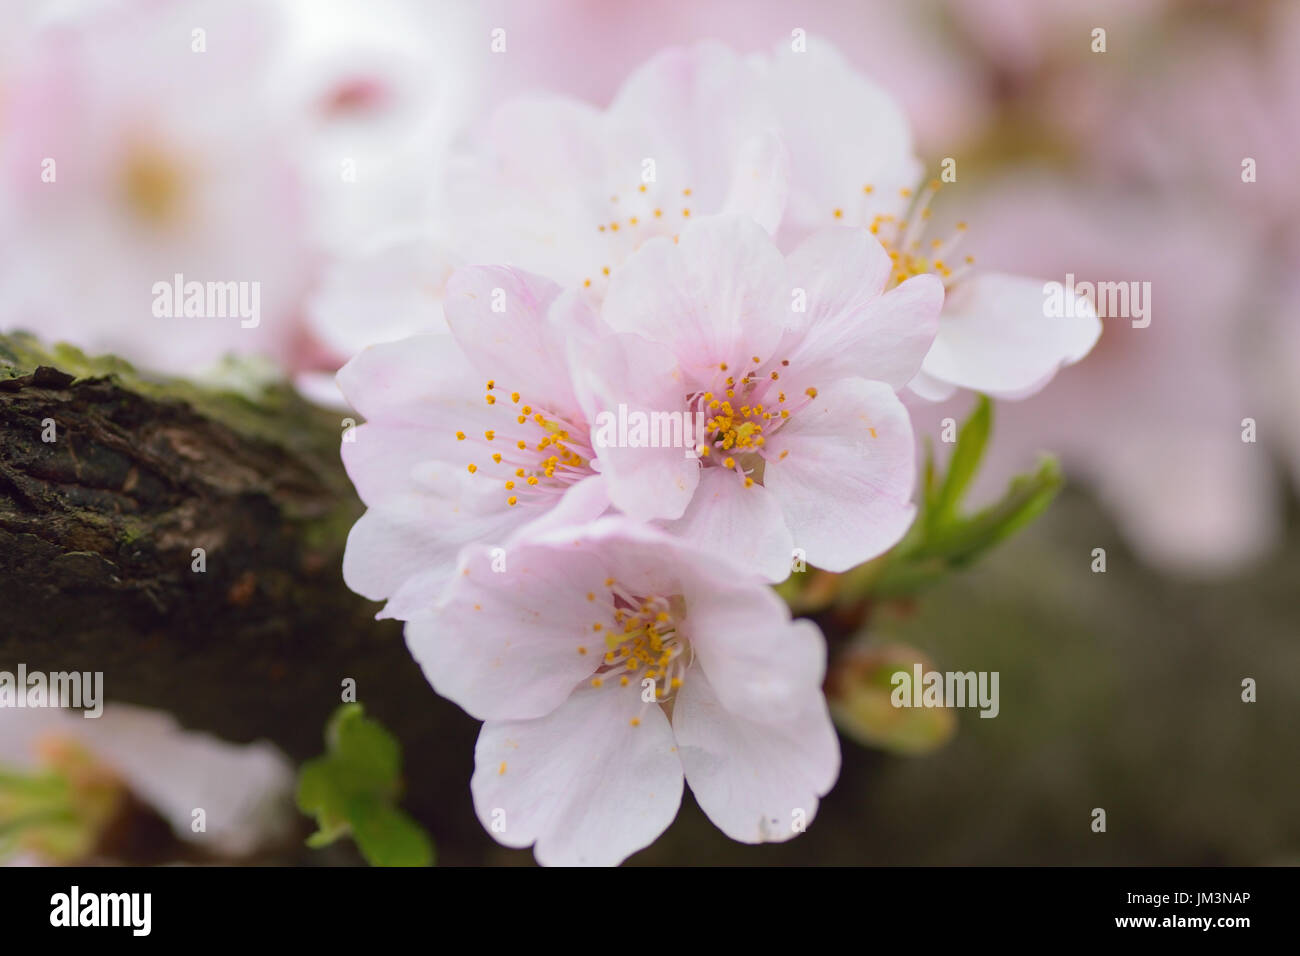 Macro details of white somei yoshino Cherry blossom branches in horizontal frame Stock Photo